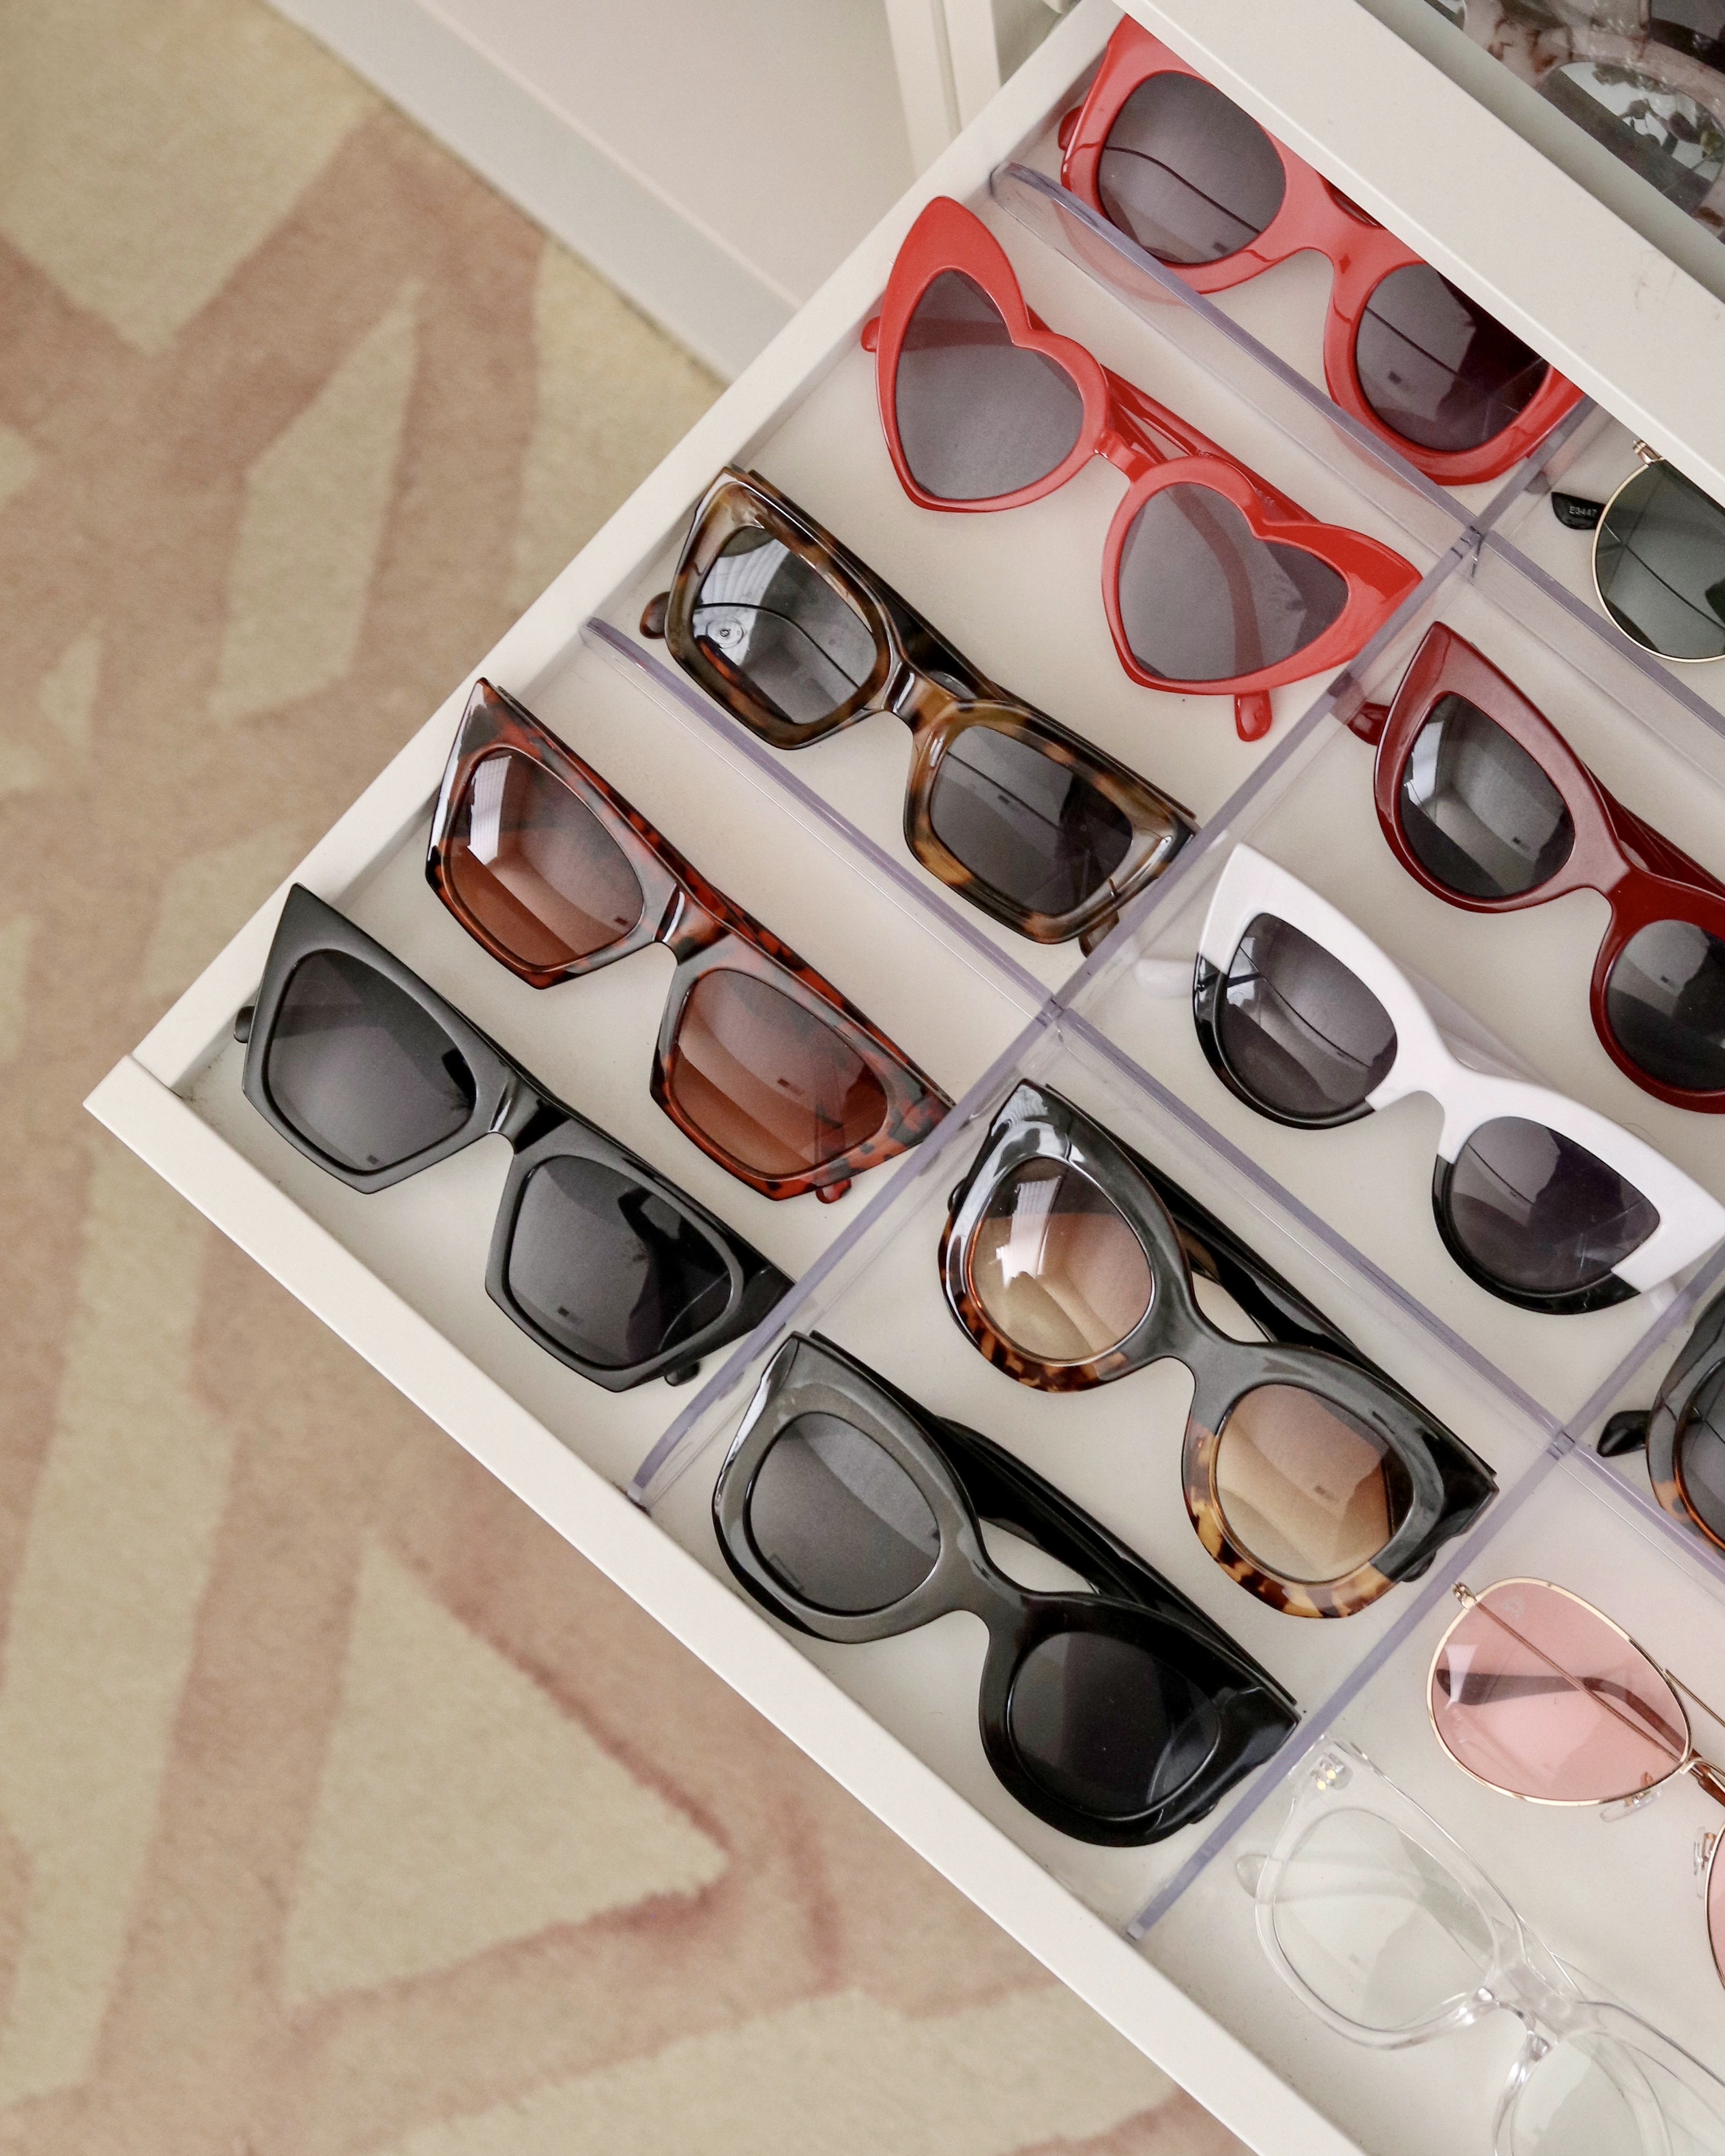 Amazon sunglasses collection